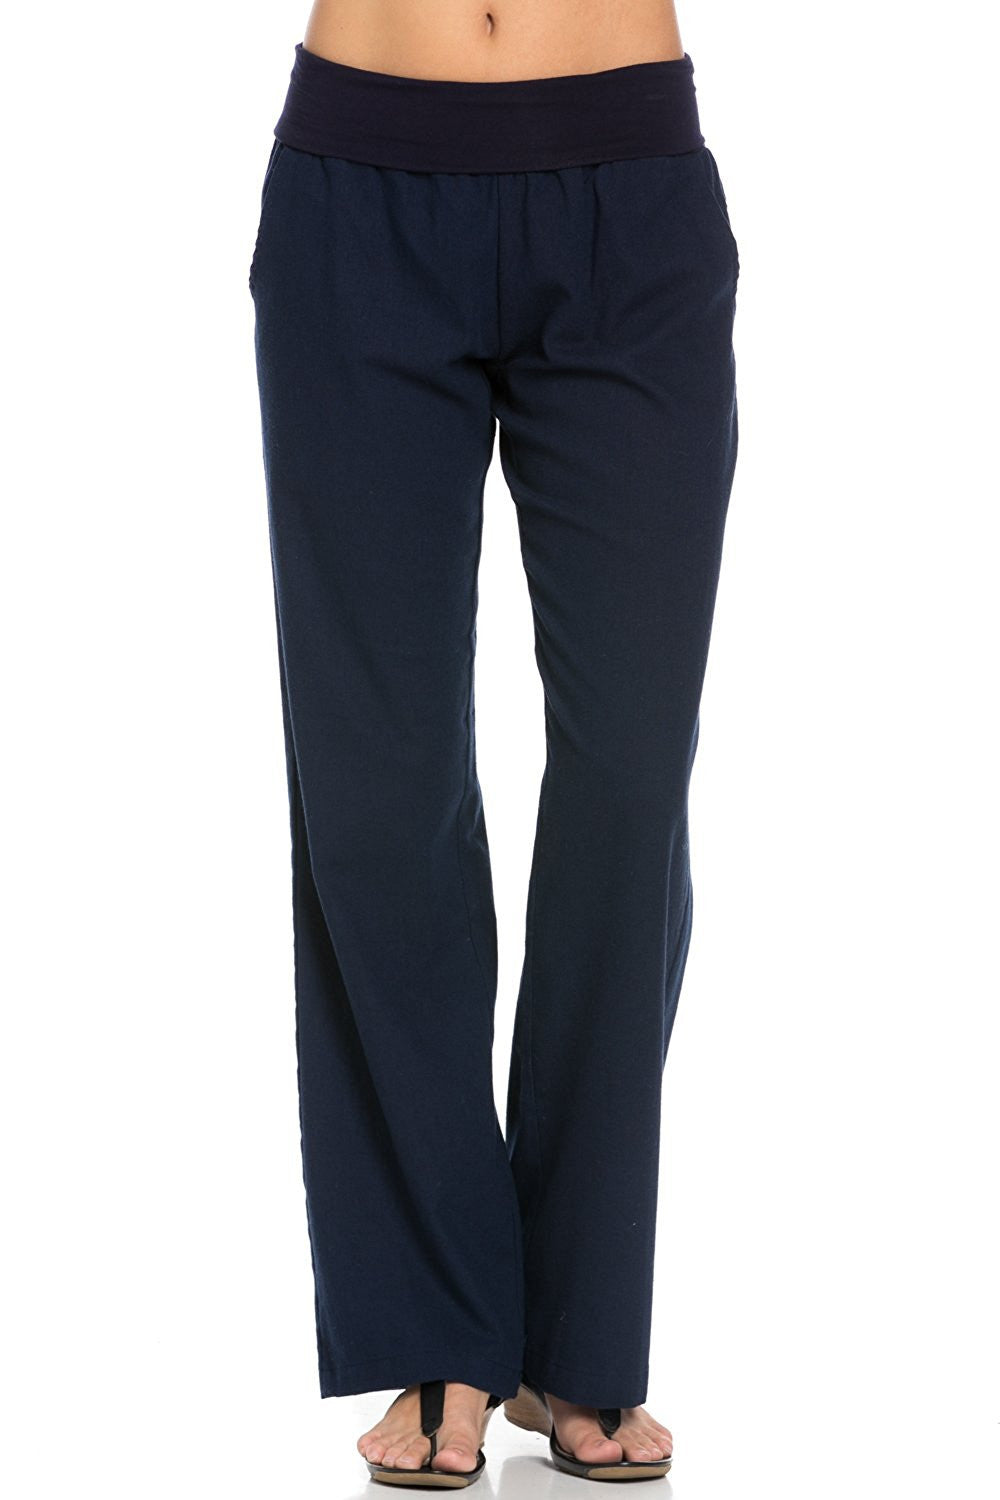 Comfy Fold Over Linen Pants (Navy) - Poplooks